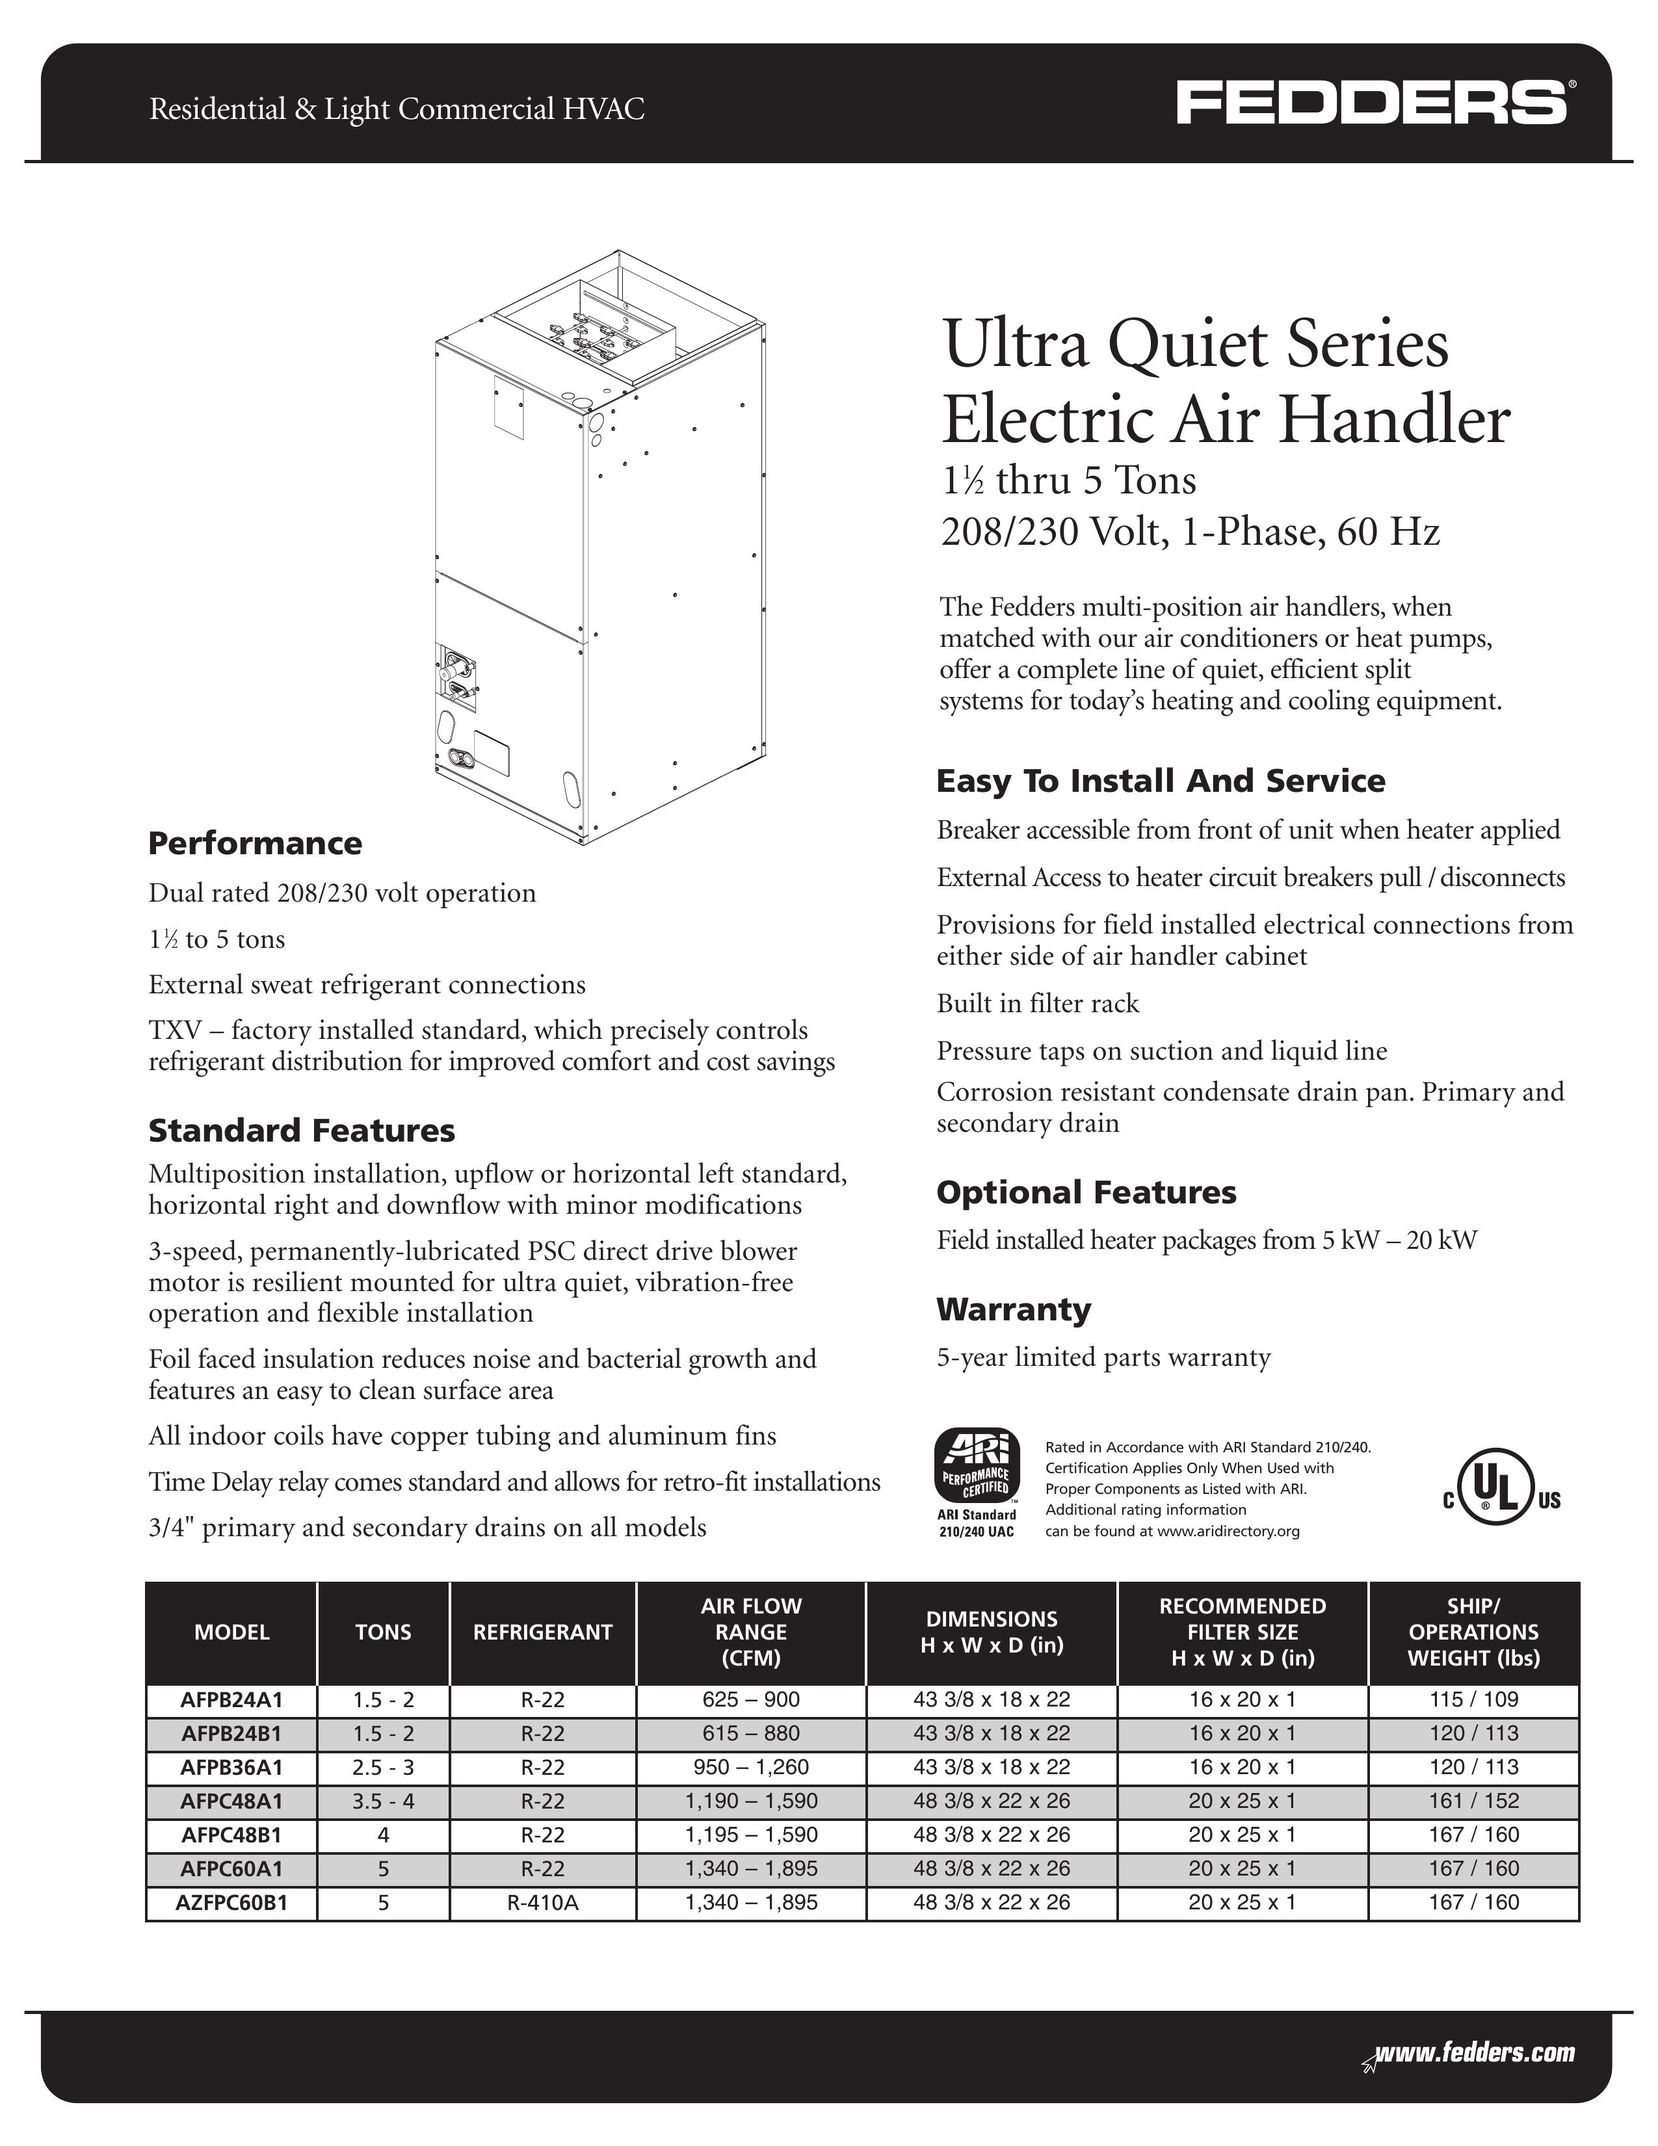 Fedders AZFPC60B1 Air Conditioner User Manual